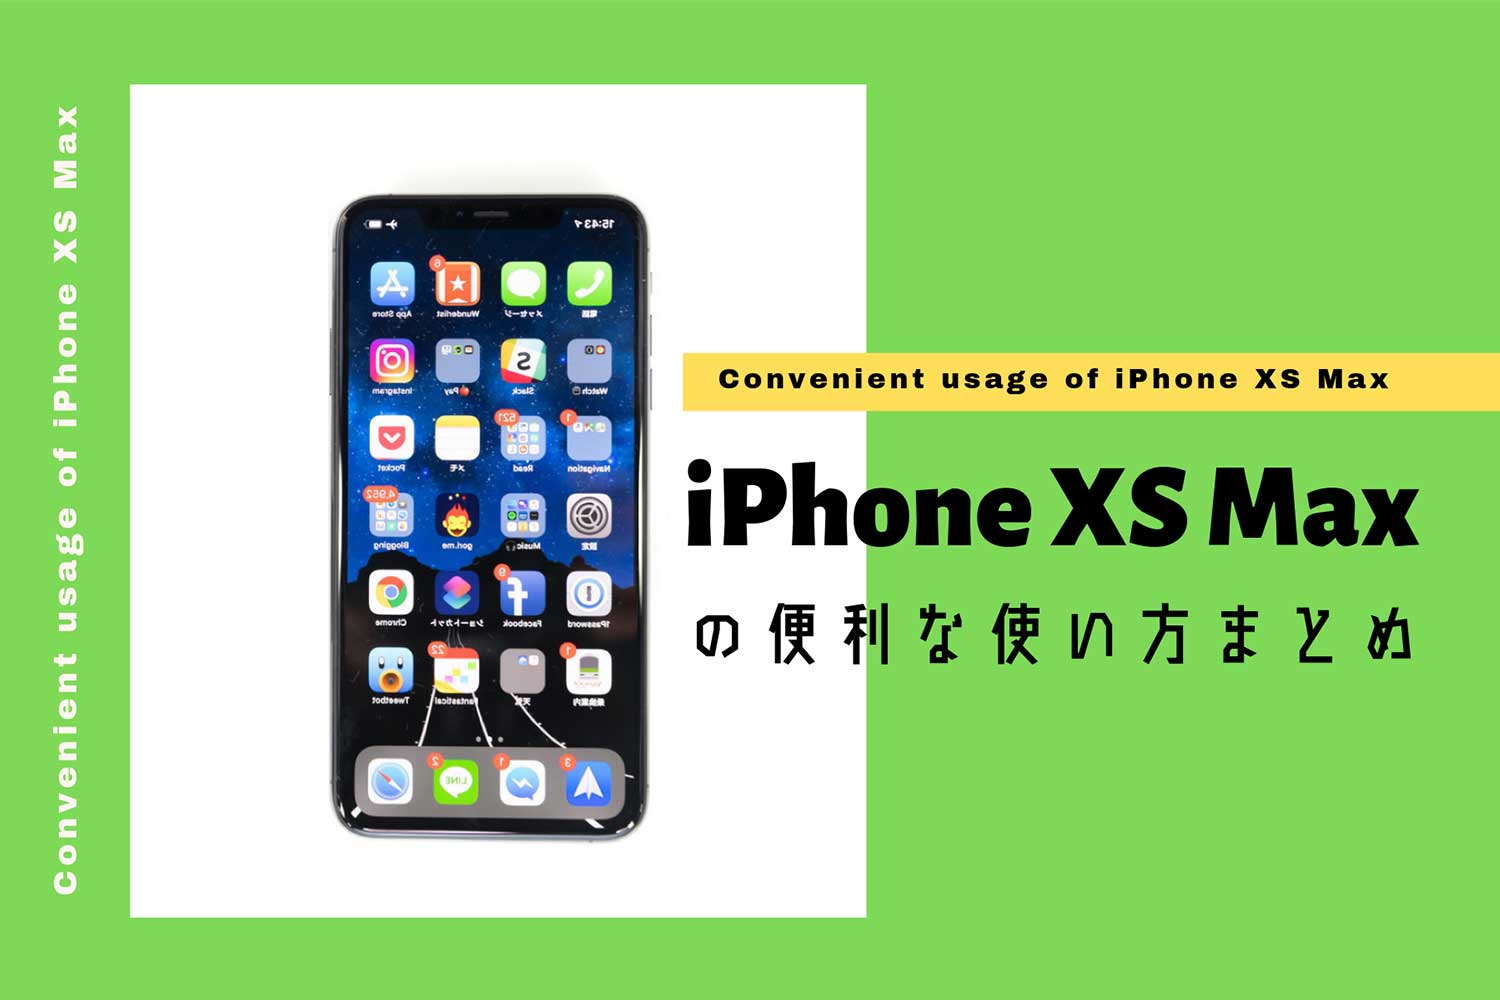 iPhone-xs-max-userguide-thumbnail